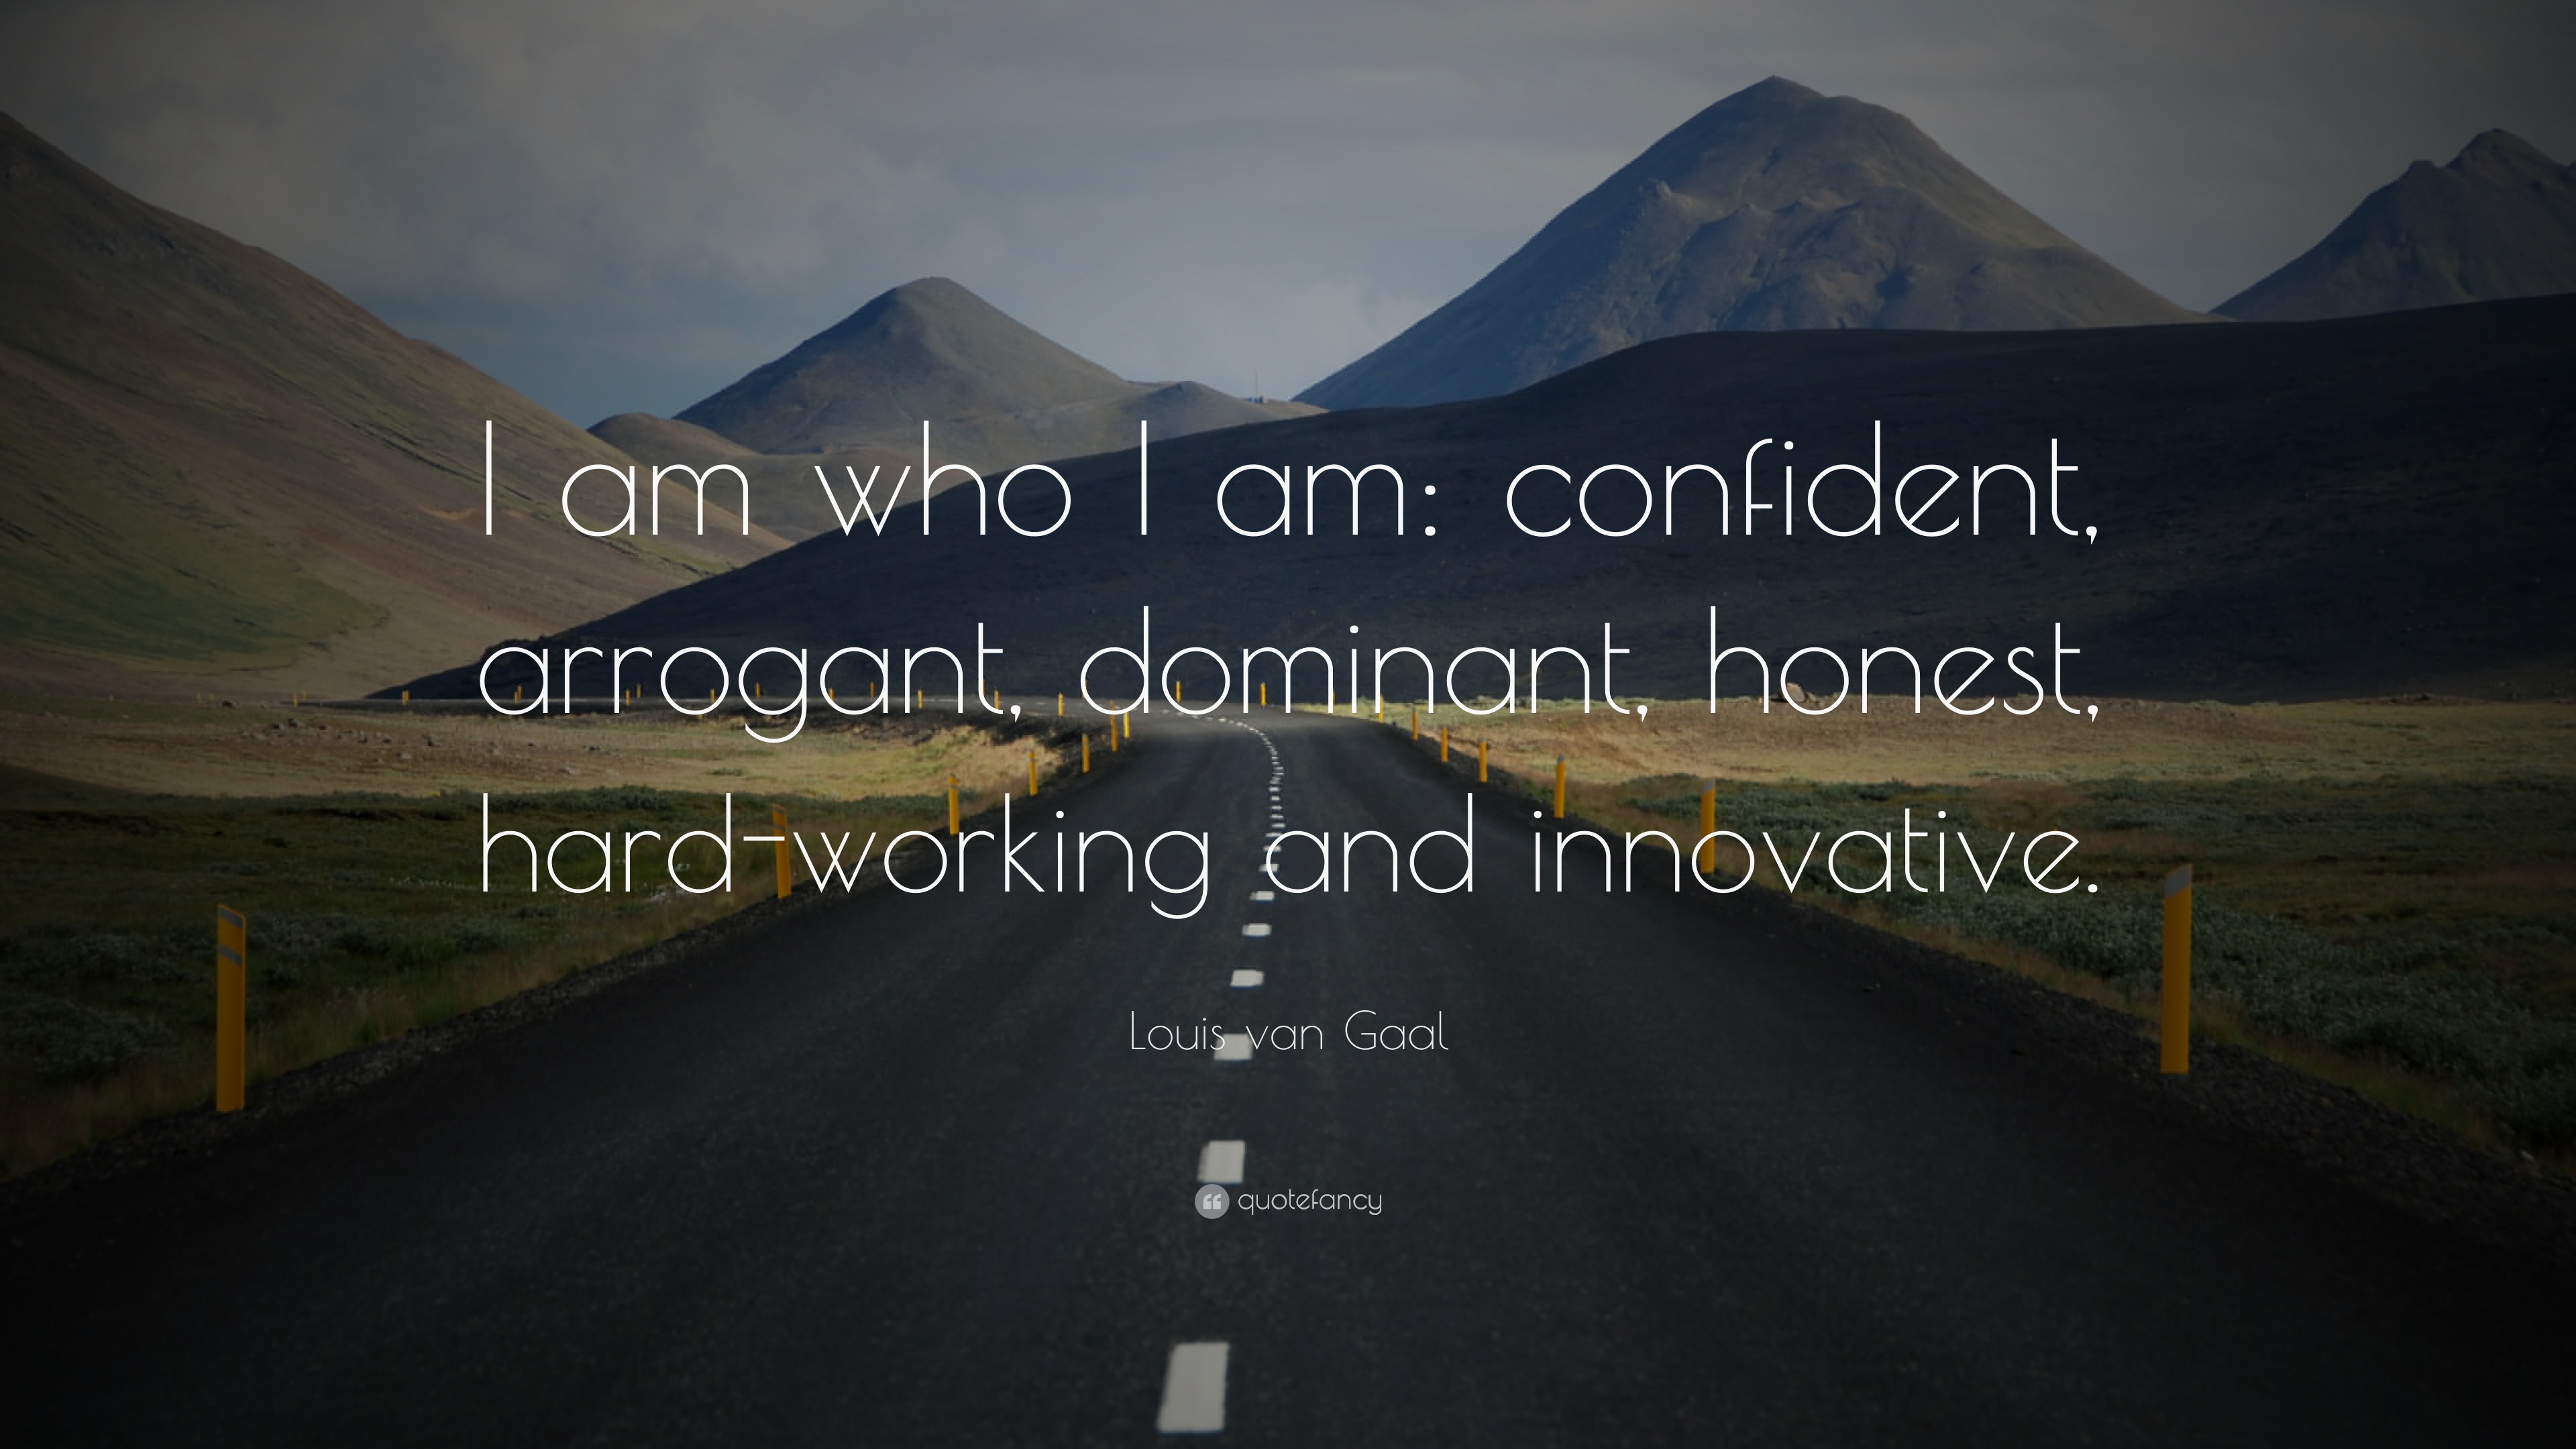 Louis van Gaal Quote: “I am who I am: confident, arrogant, dominant,  honest, hard-working and